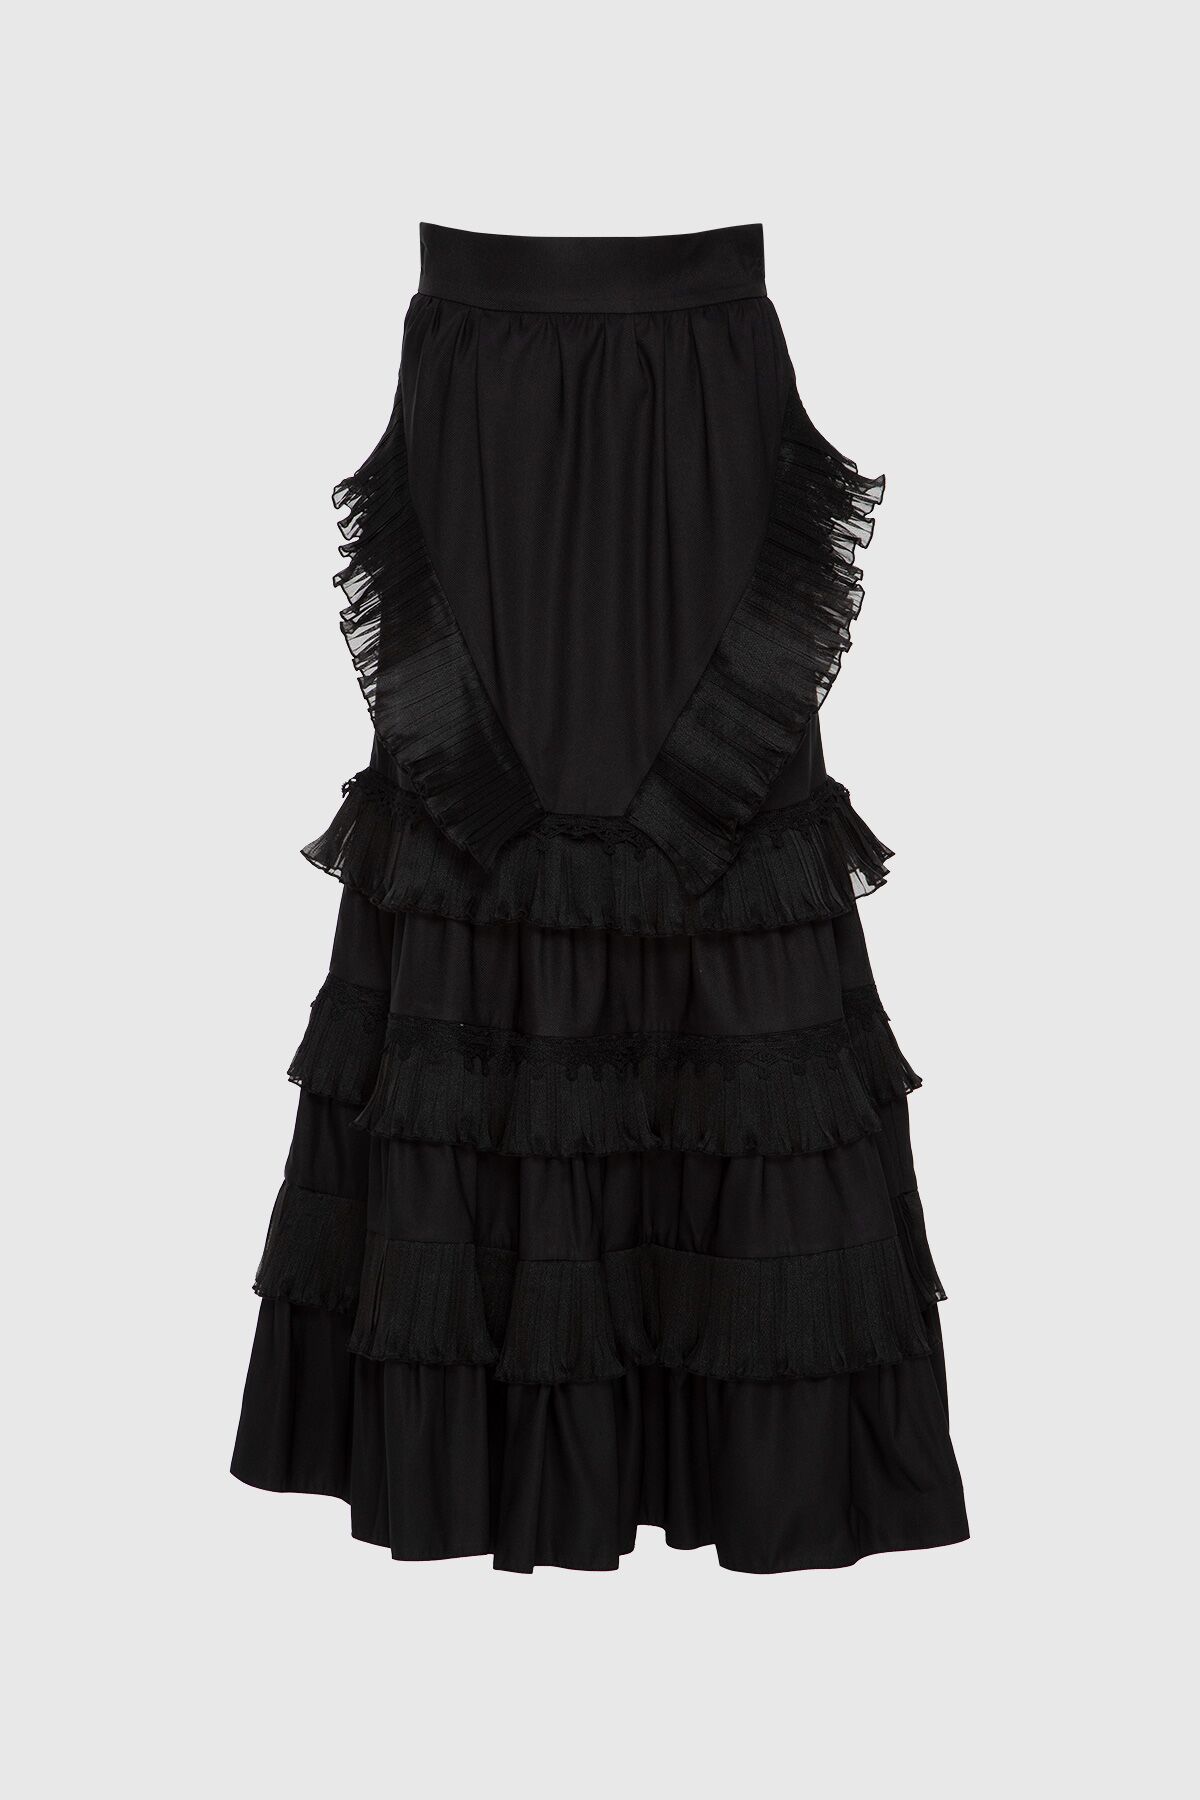  GIZIA - High Waist Organza Pleat And Lace Detail Long Black Skirt